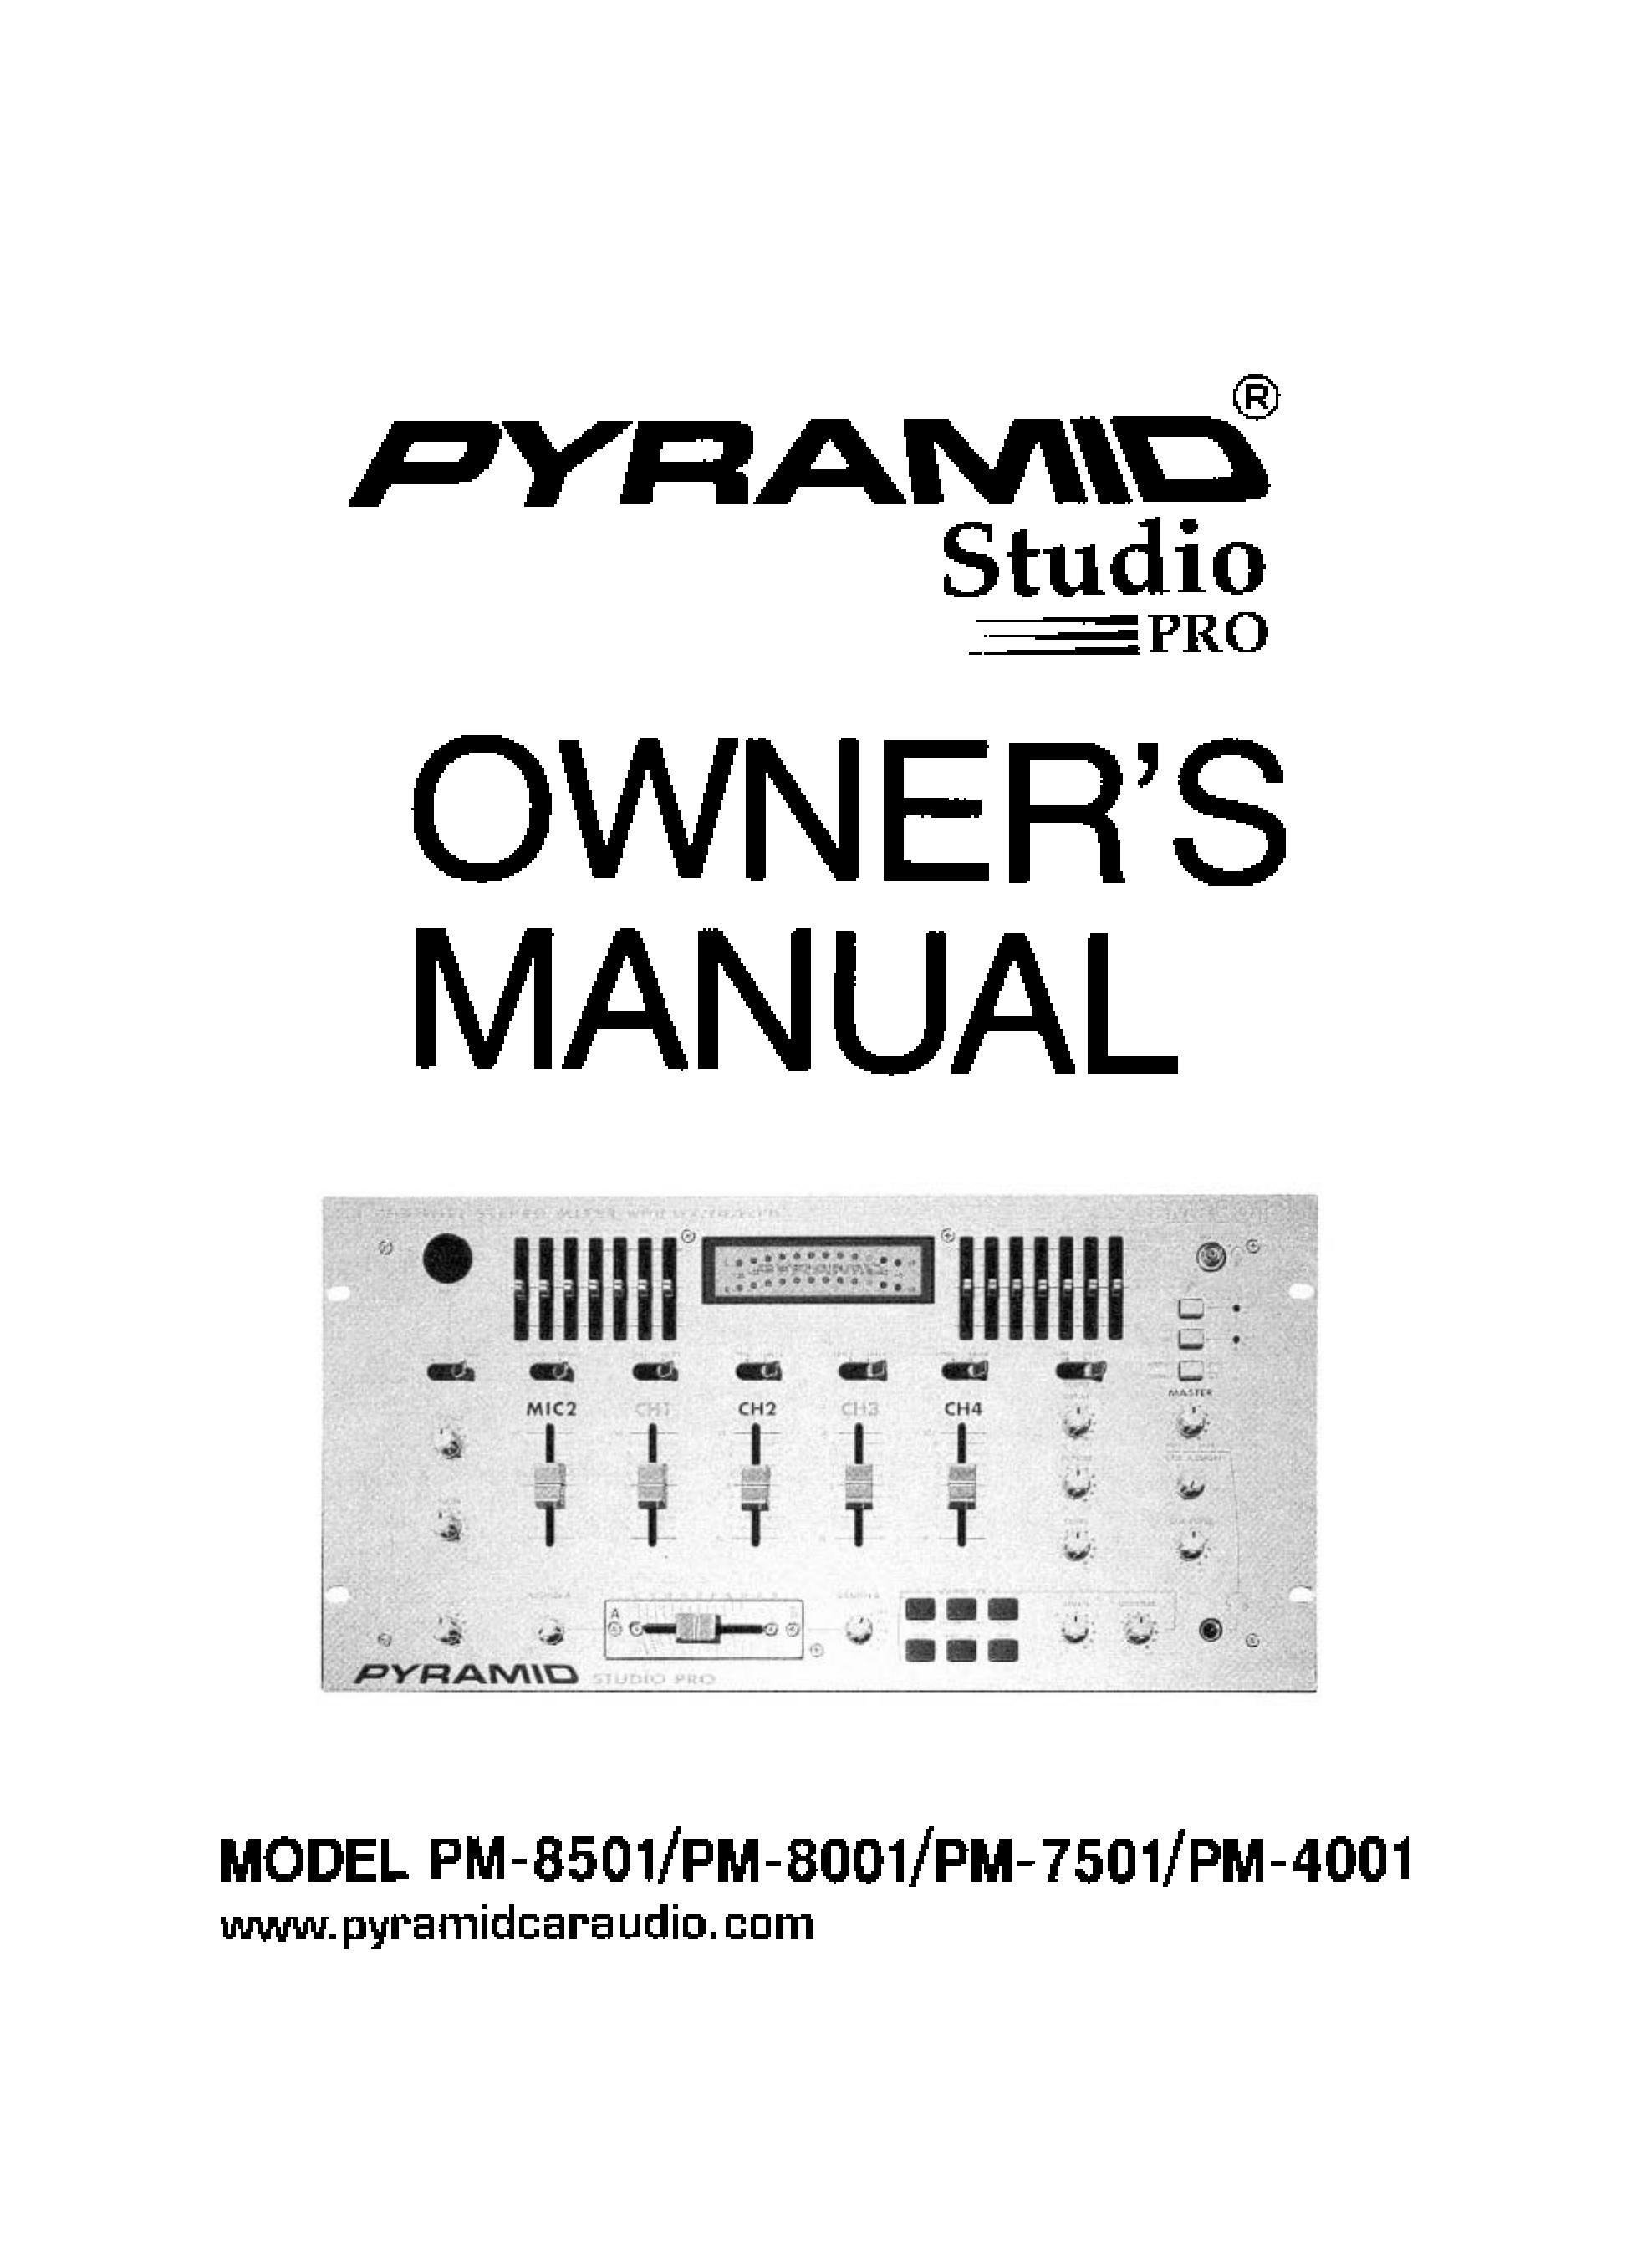 Pyramid Car Audio PM-4001 Music Mixer User Manual